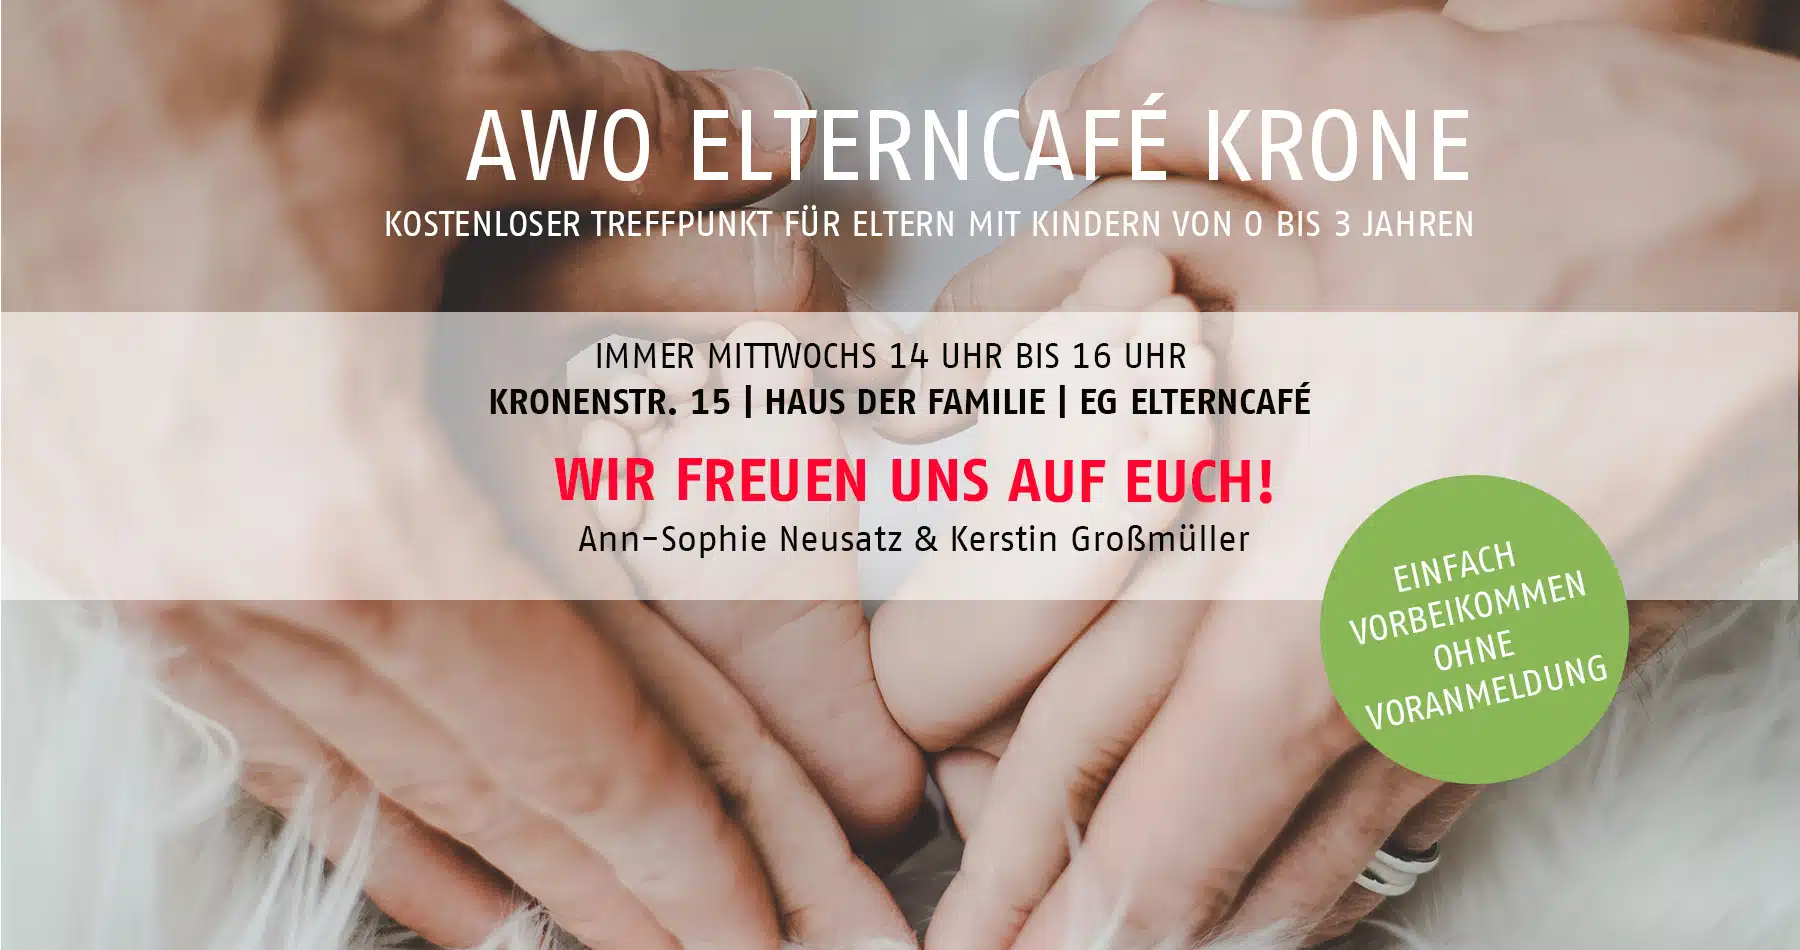 Header Elterncafe Krone AWO Karlsruhe